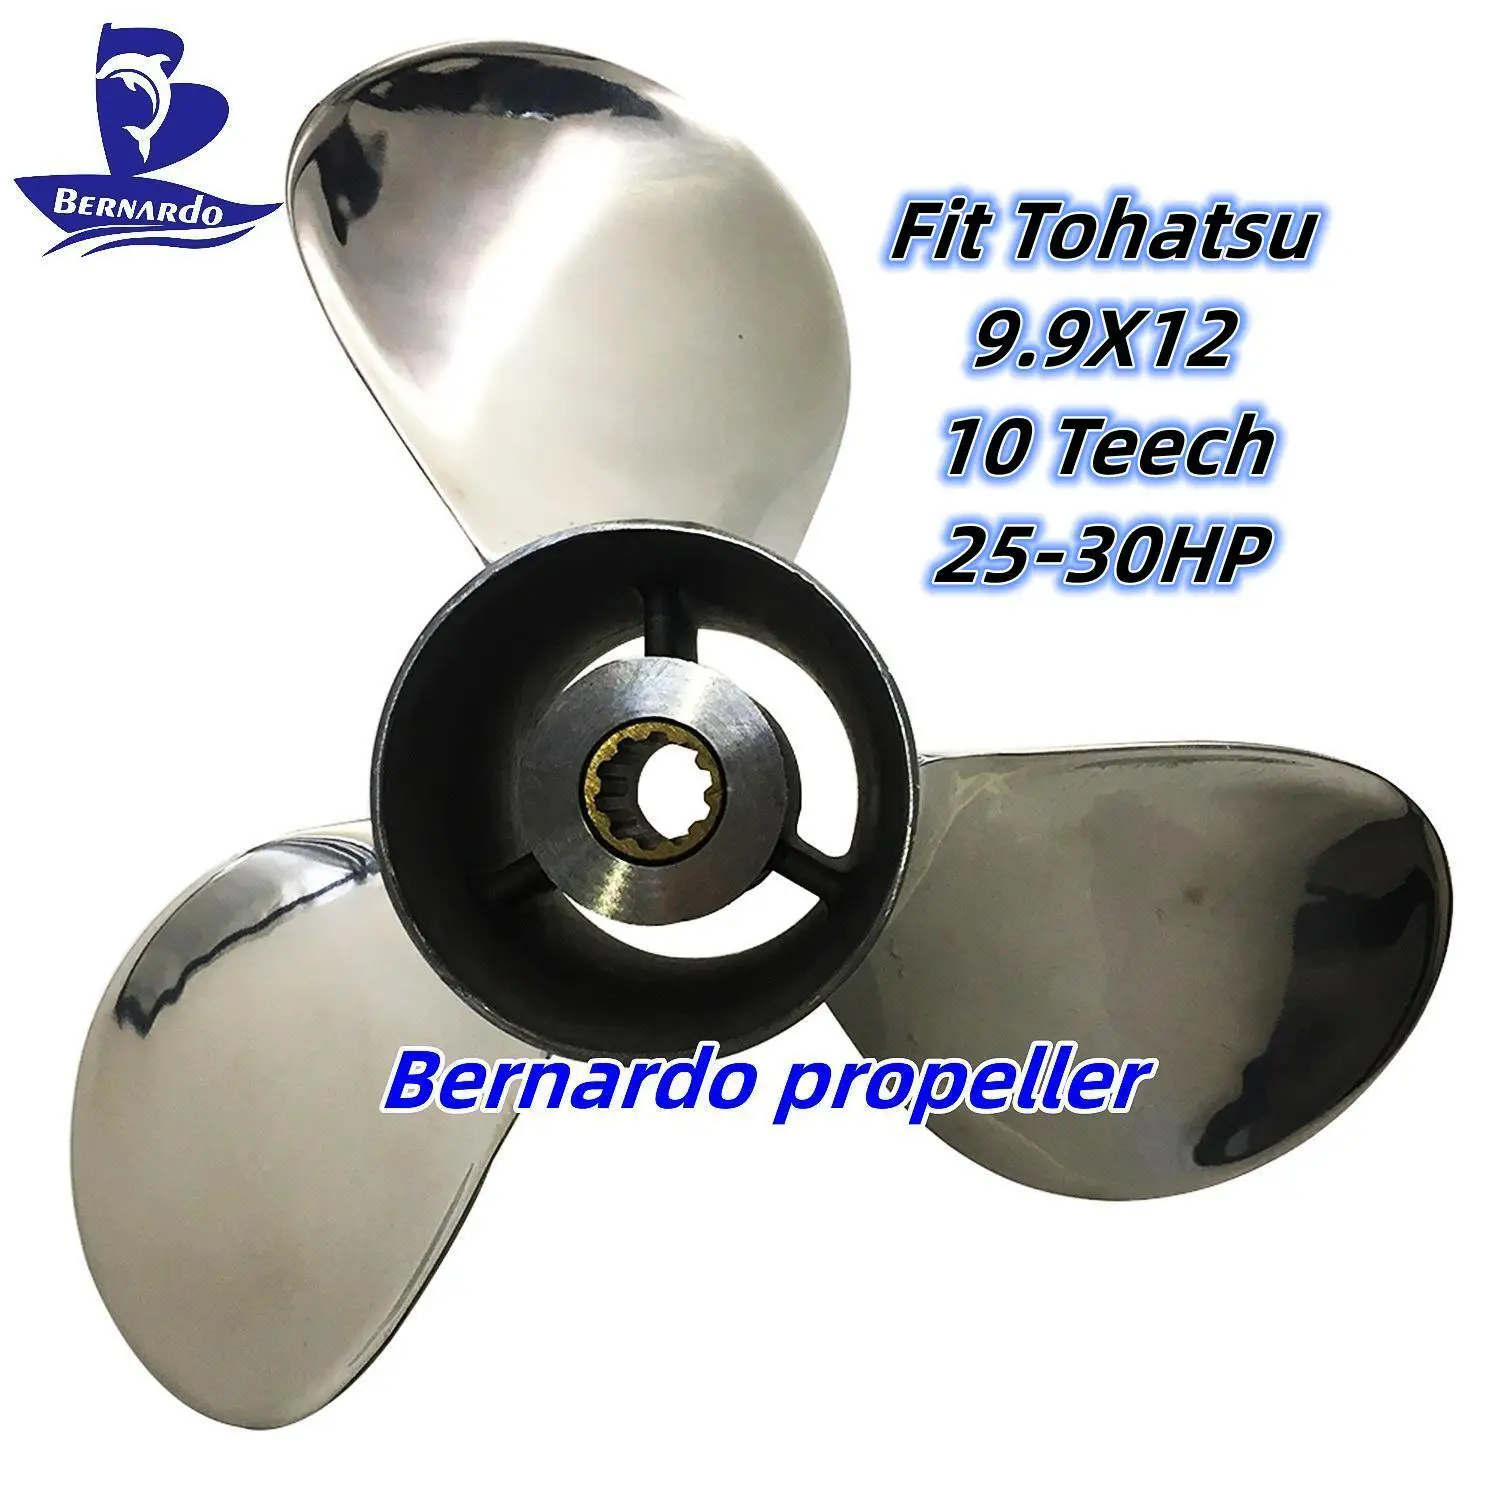 Bernardo Boat Propeller 9.9X12 Fit Tohatsu Outboard Engines 25 30HP Stainless Steel Screw 3 Blade 10 Tooth Spline RH